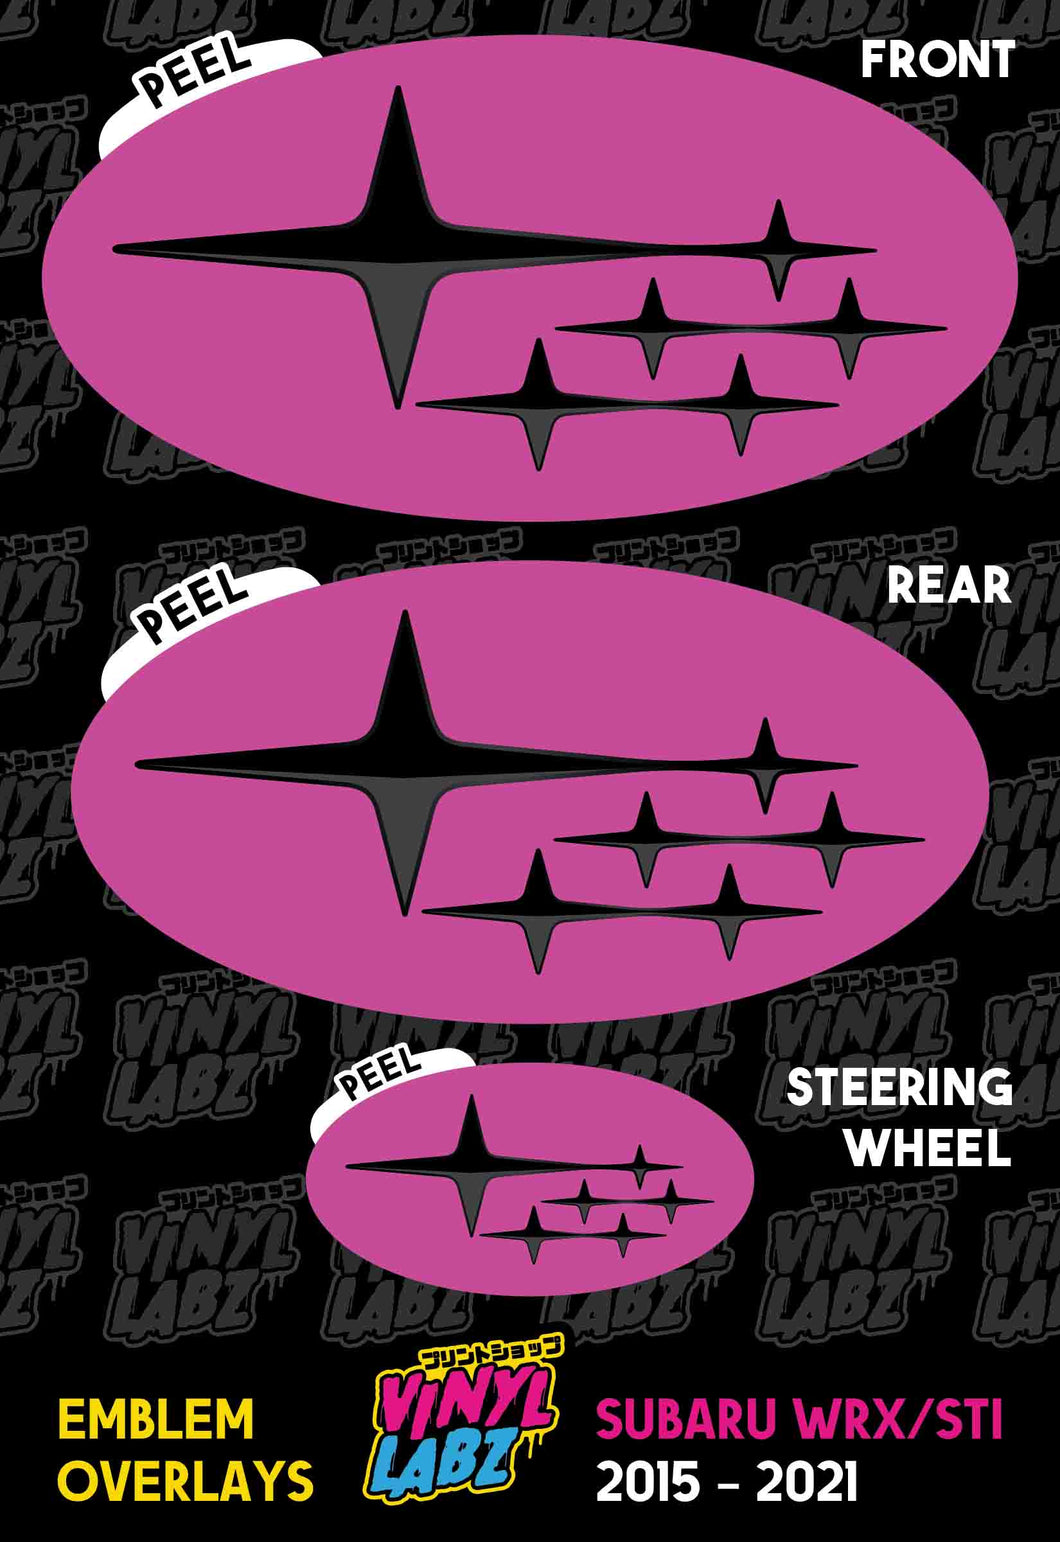 Subaru Vinyl Emblem Overlay (Pink and Black) | 2015-2021 Subaru WRX/STI